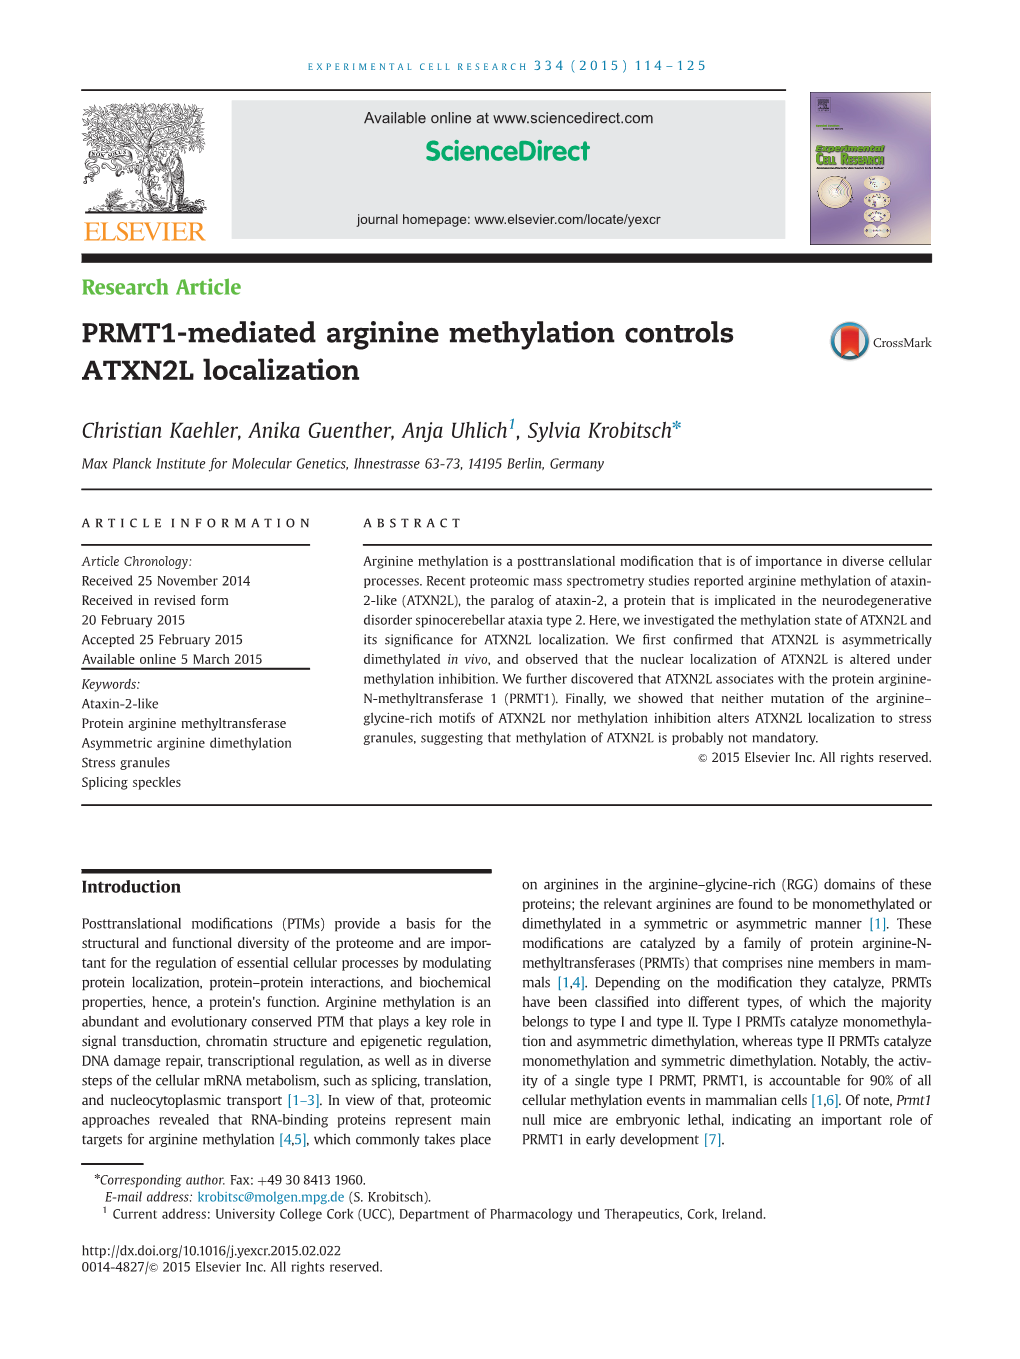 PRMT1-Mediated Arginine Methylation Controls ATXN2L Localization